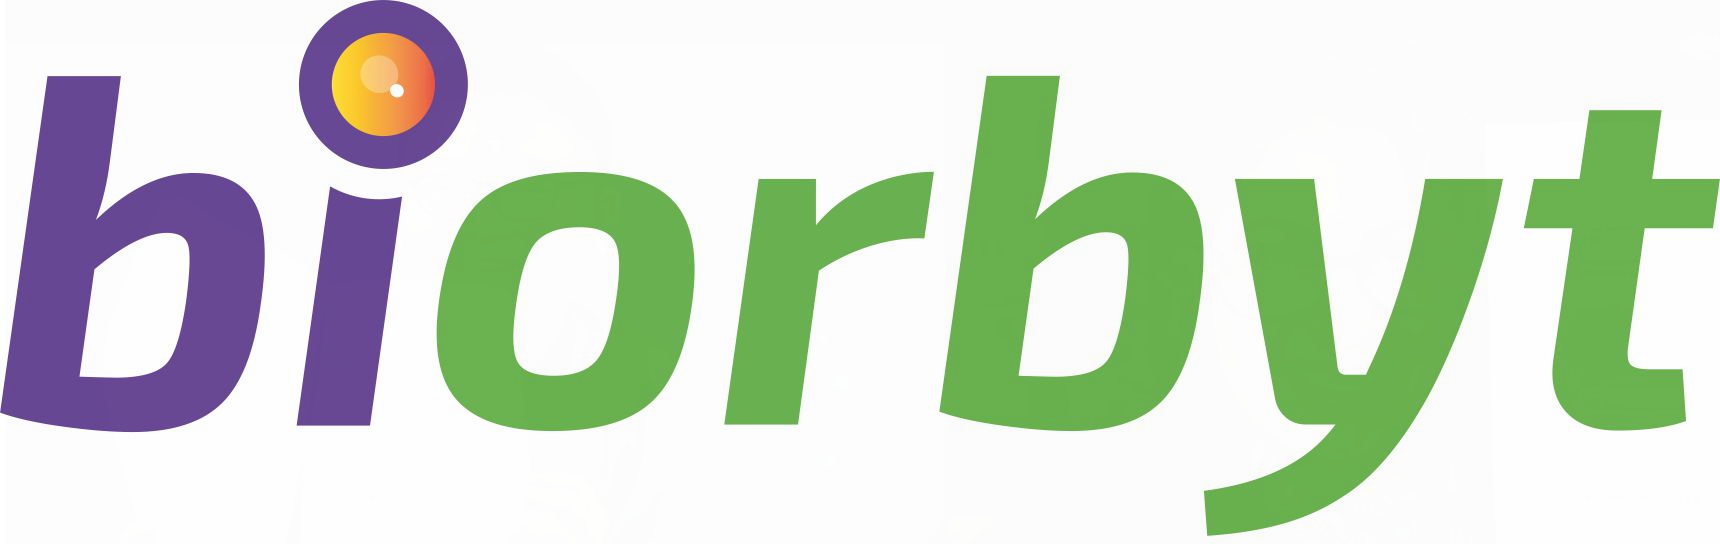 biorbyt-high-res-logo-kore-strapline